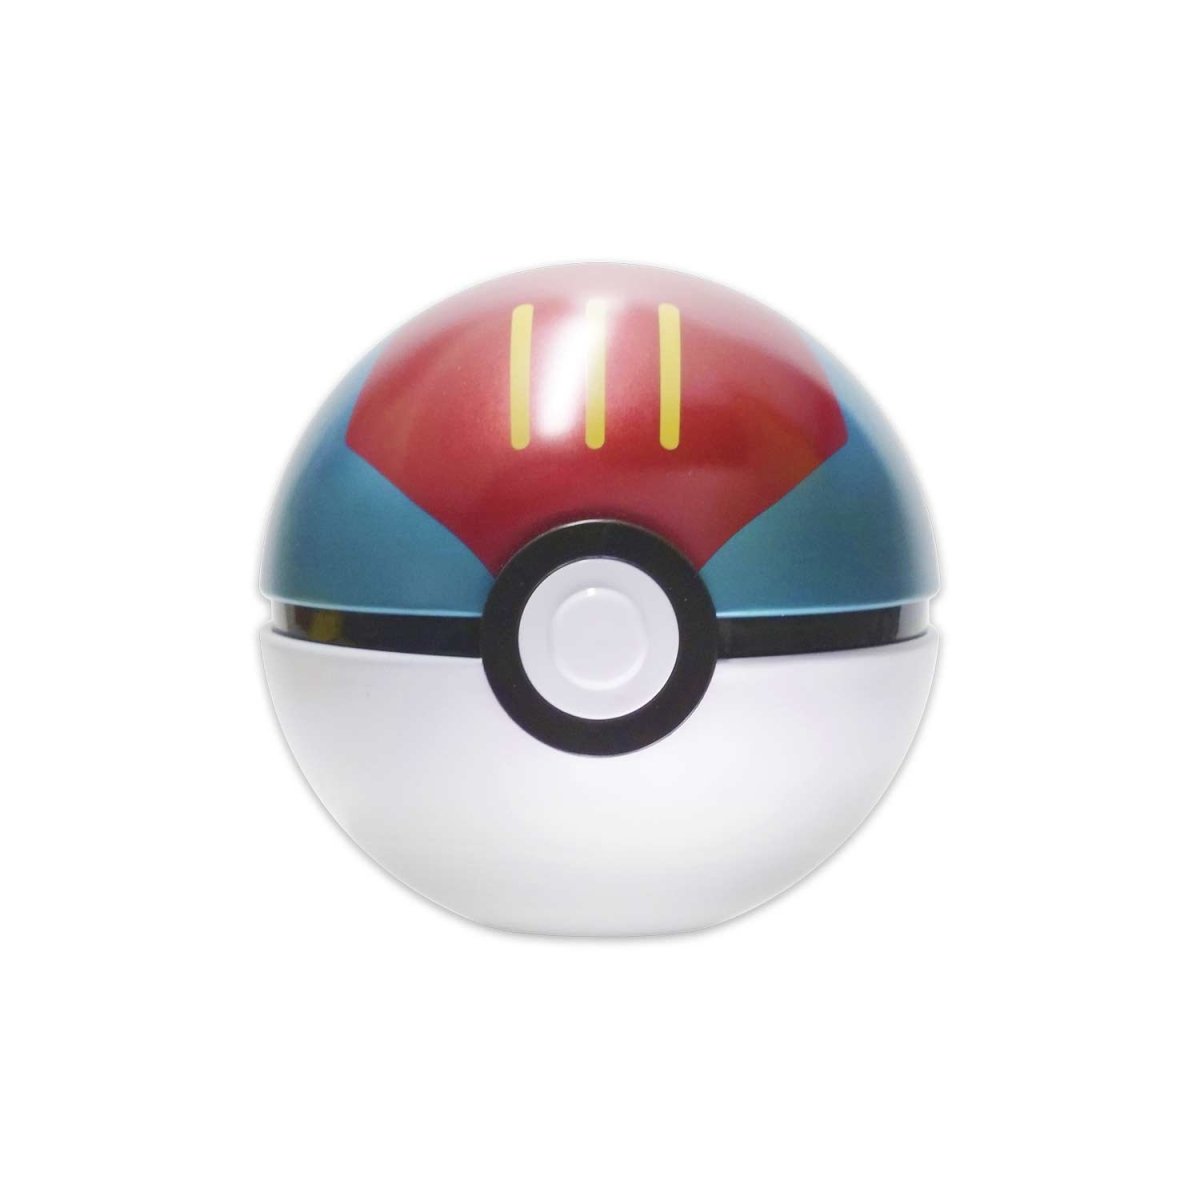 Pokémon Poke Ball Battlers Lure Ball Spin Toy Hasbro 2000 Nintendo